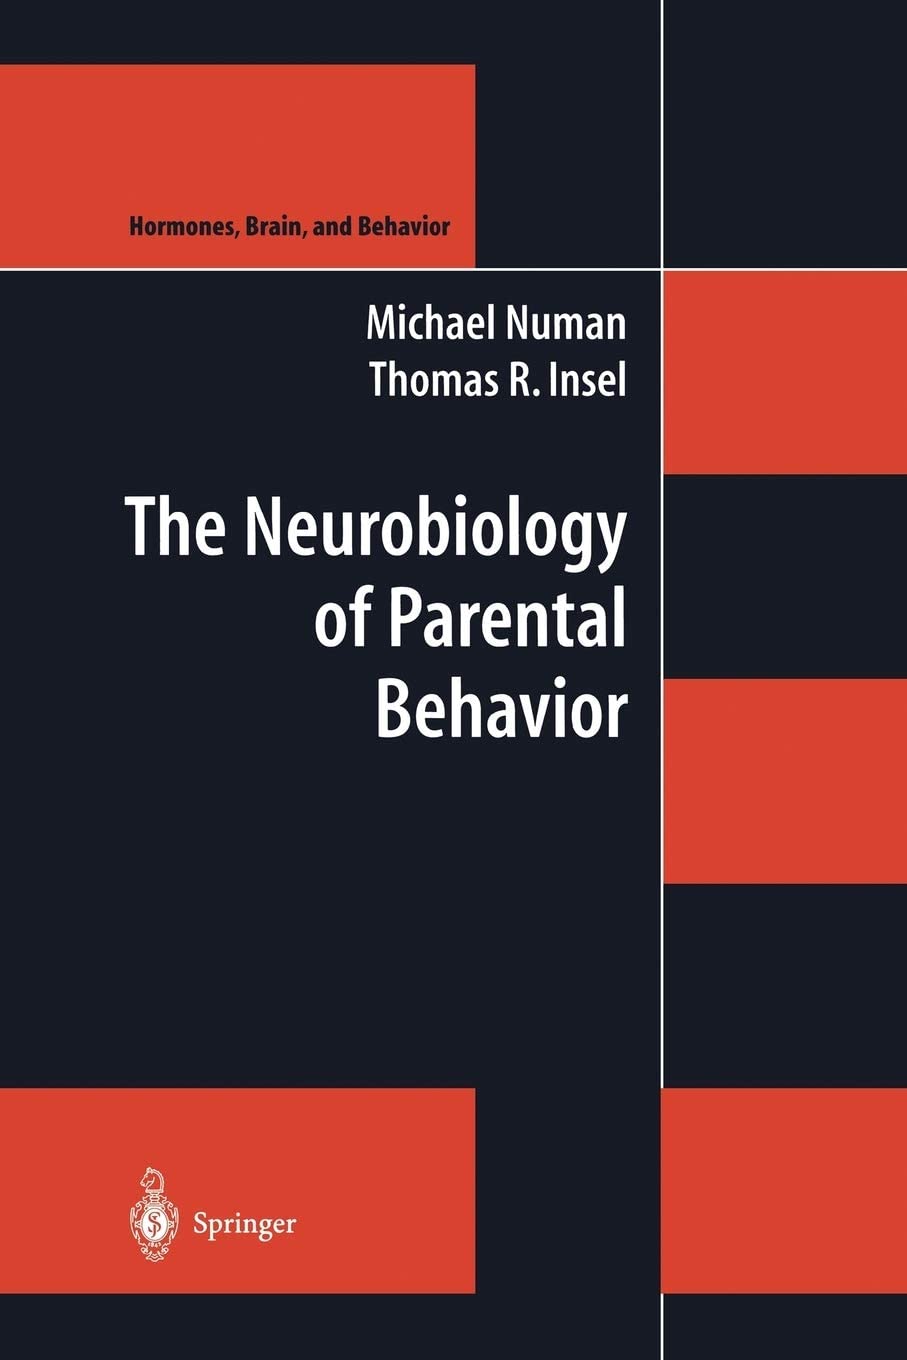 The Neurobiology of Parental Behavior (Hormones, Brain, and Behavior, 1)